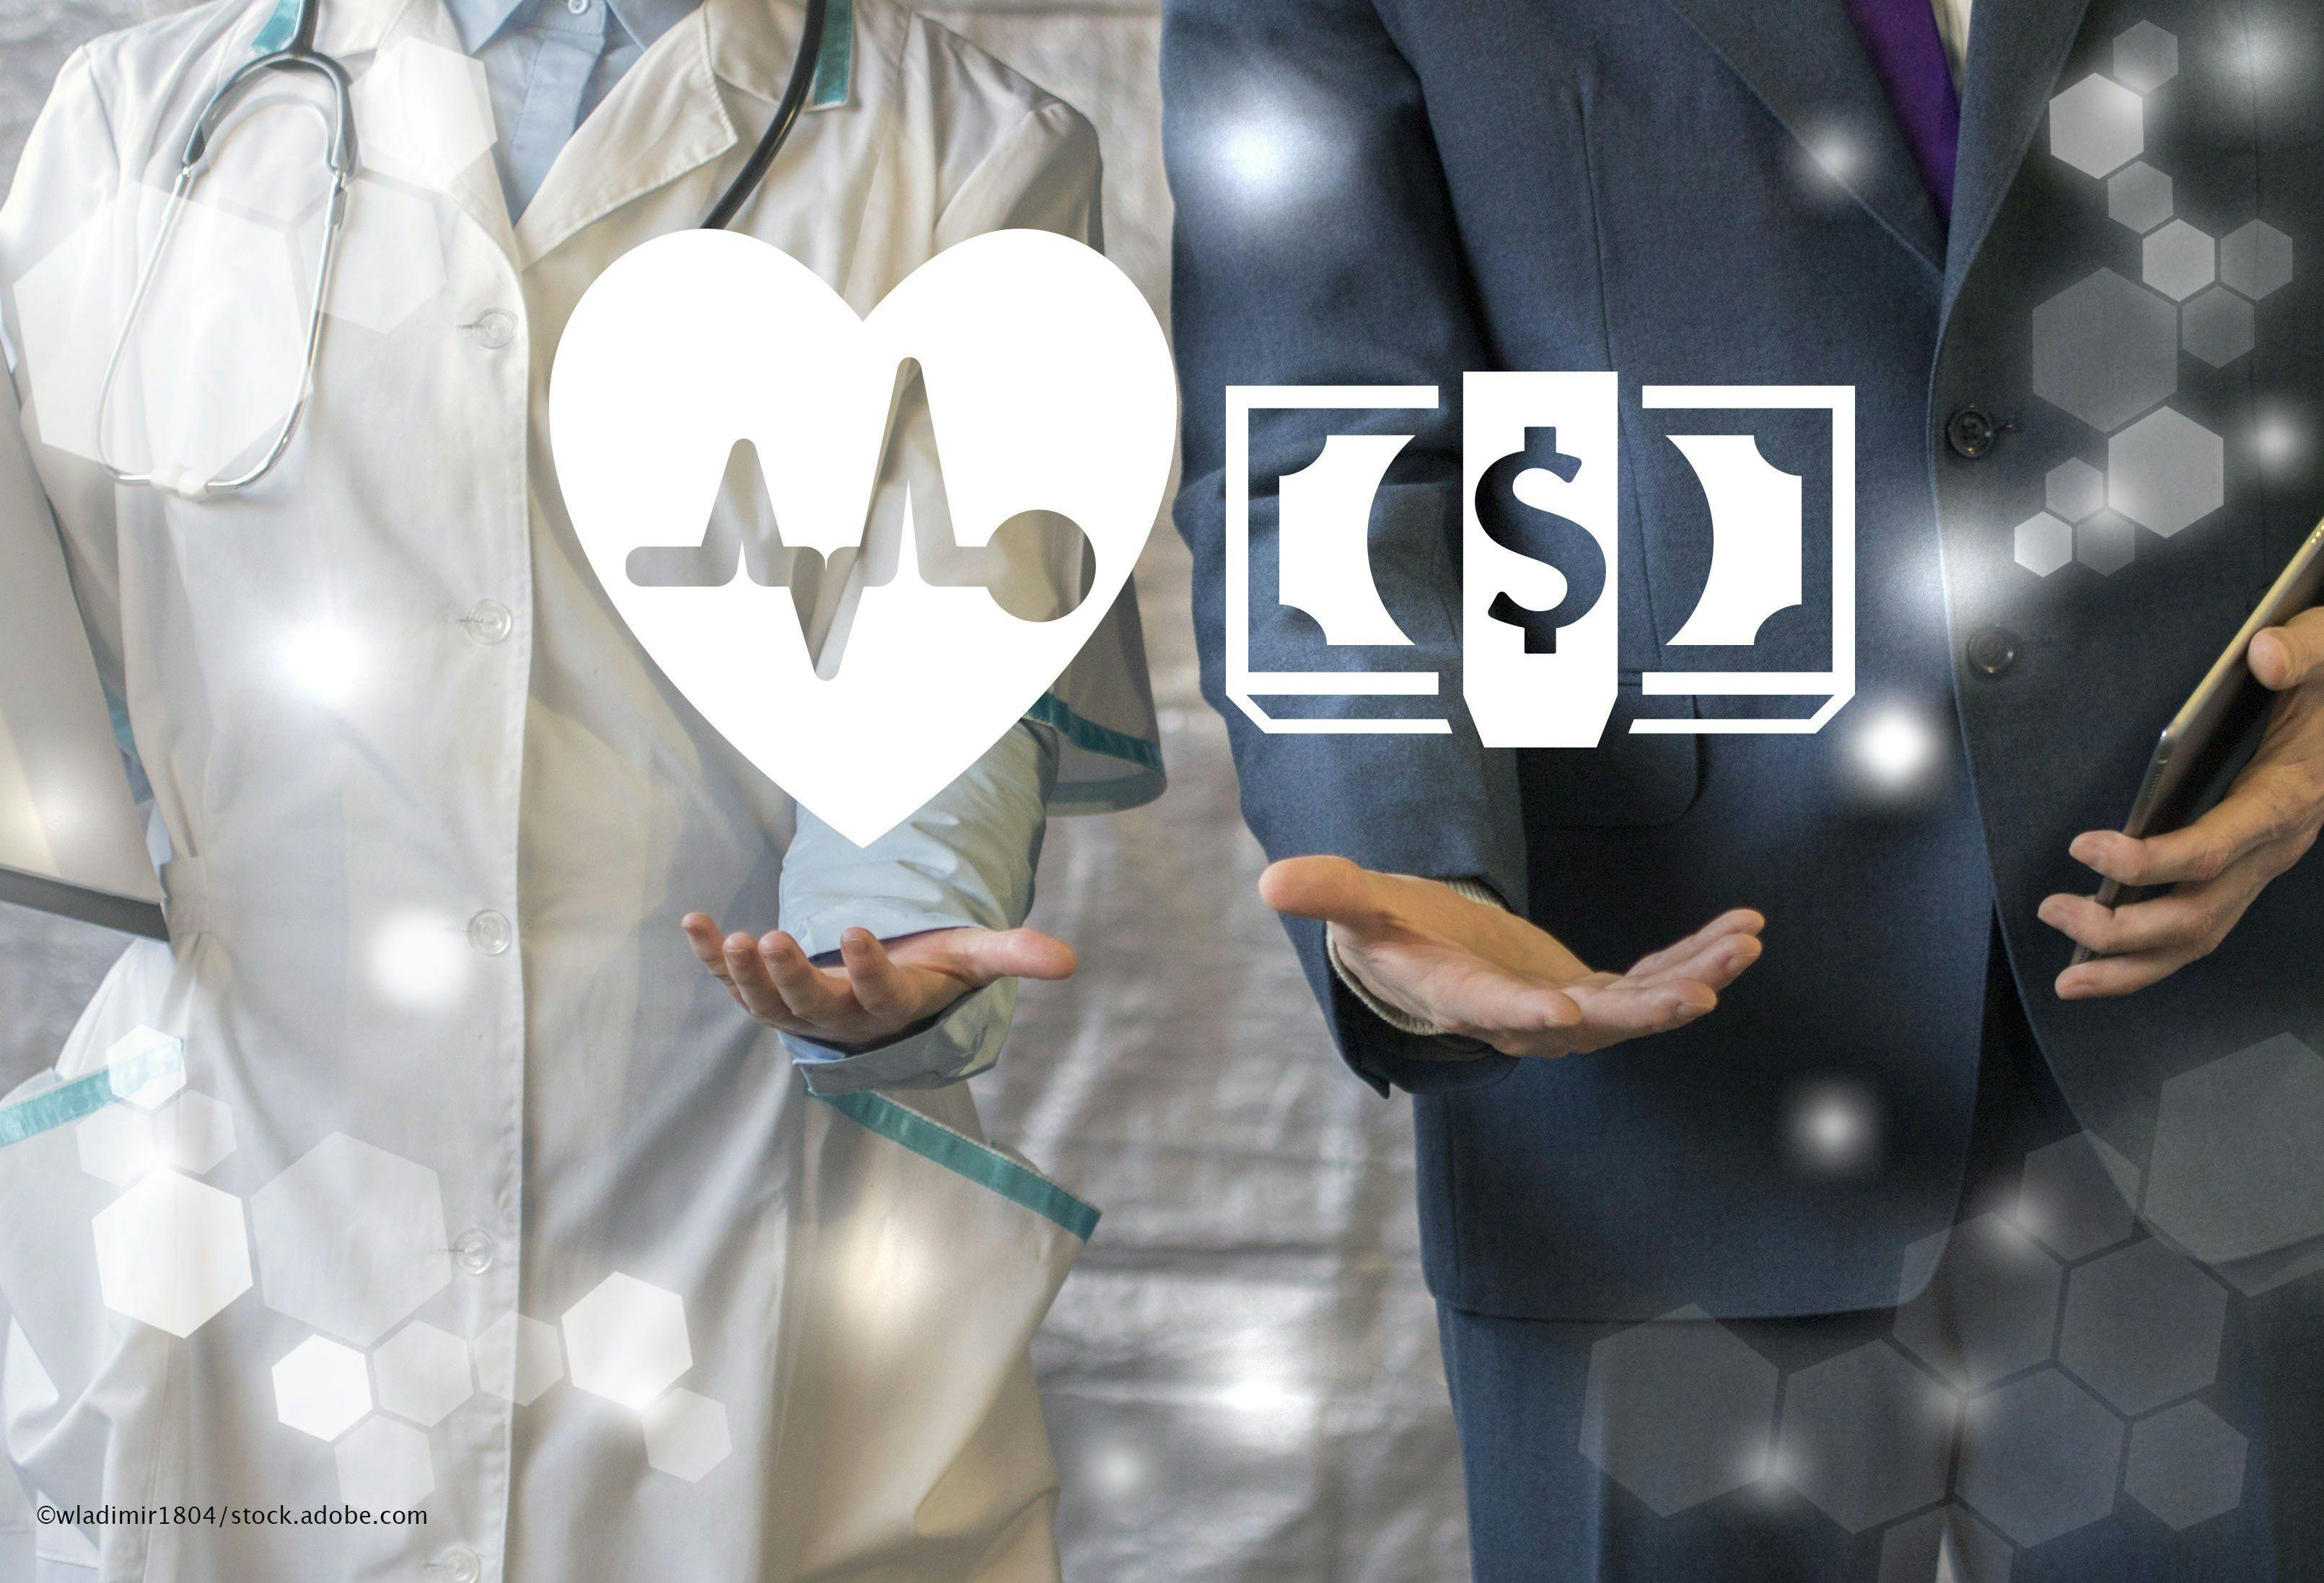 value-based care, healthcare, chronic kidney disease, chronic disease, payers